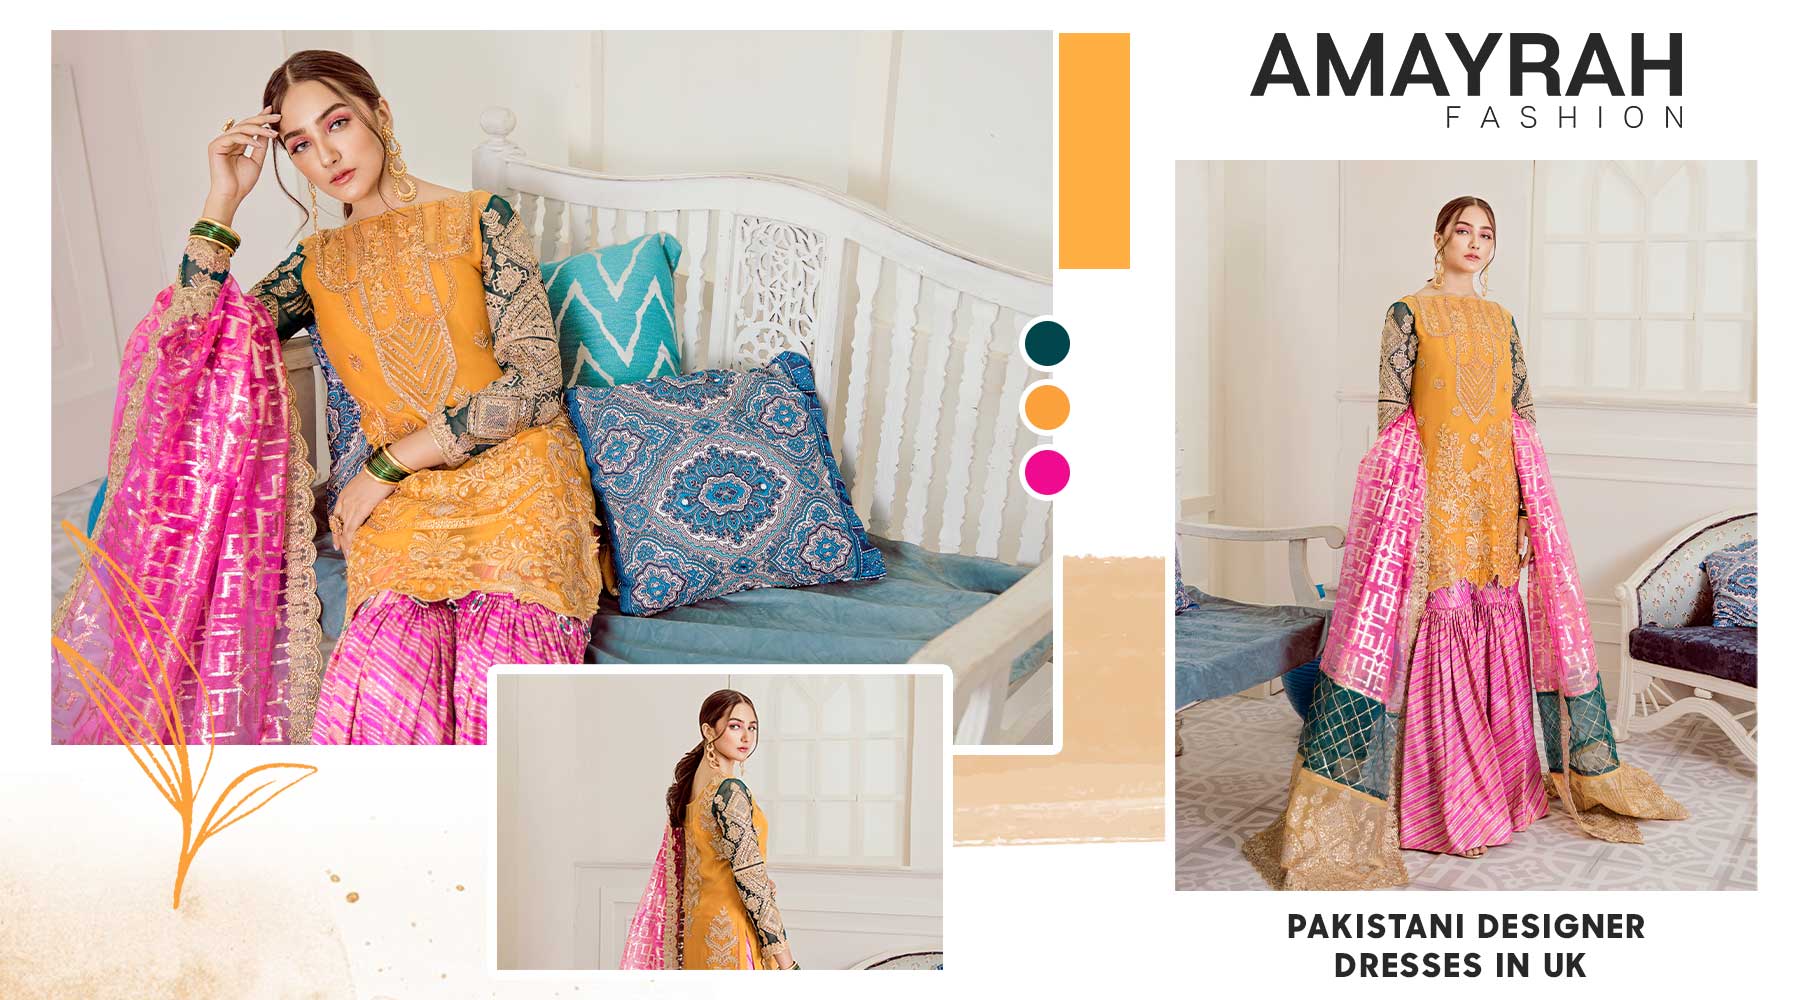 Amayrah Fashion - Your Ultimate Destination for Pakistani Designer Dresses in the UK